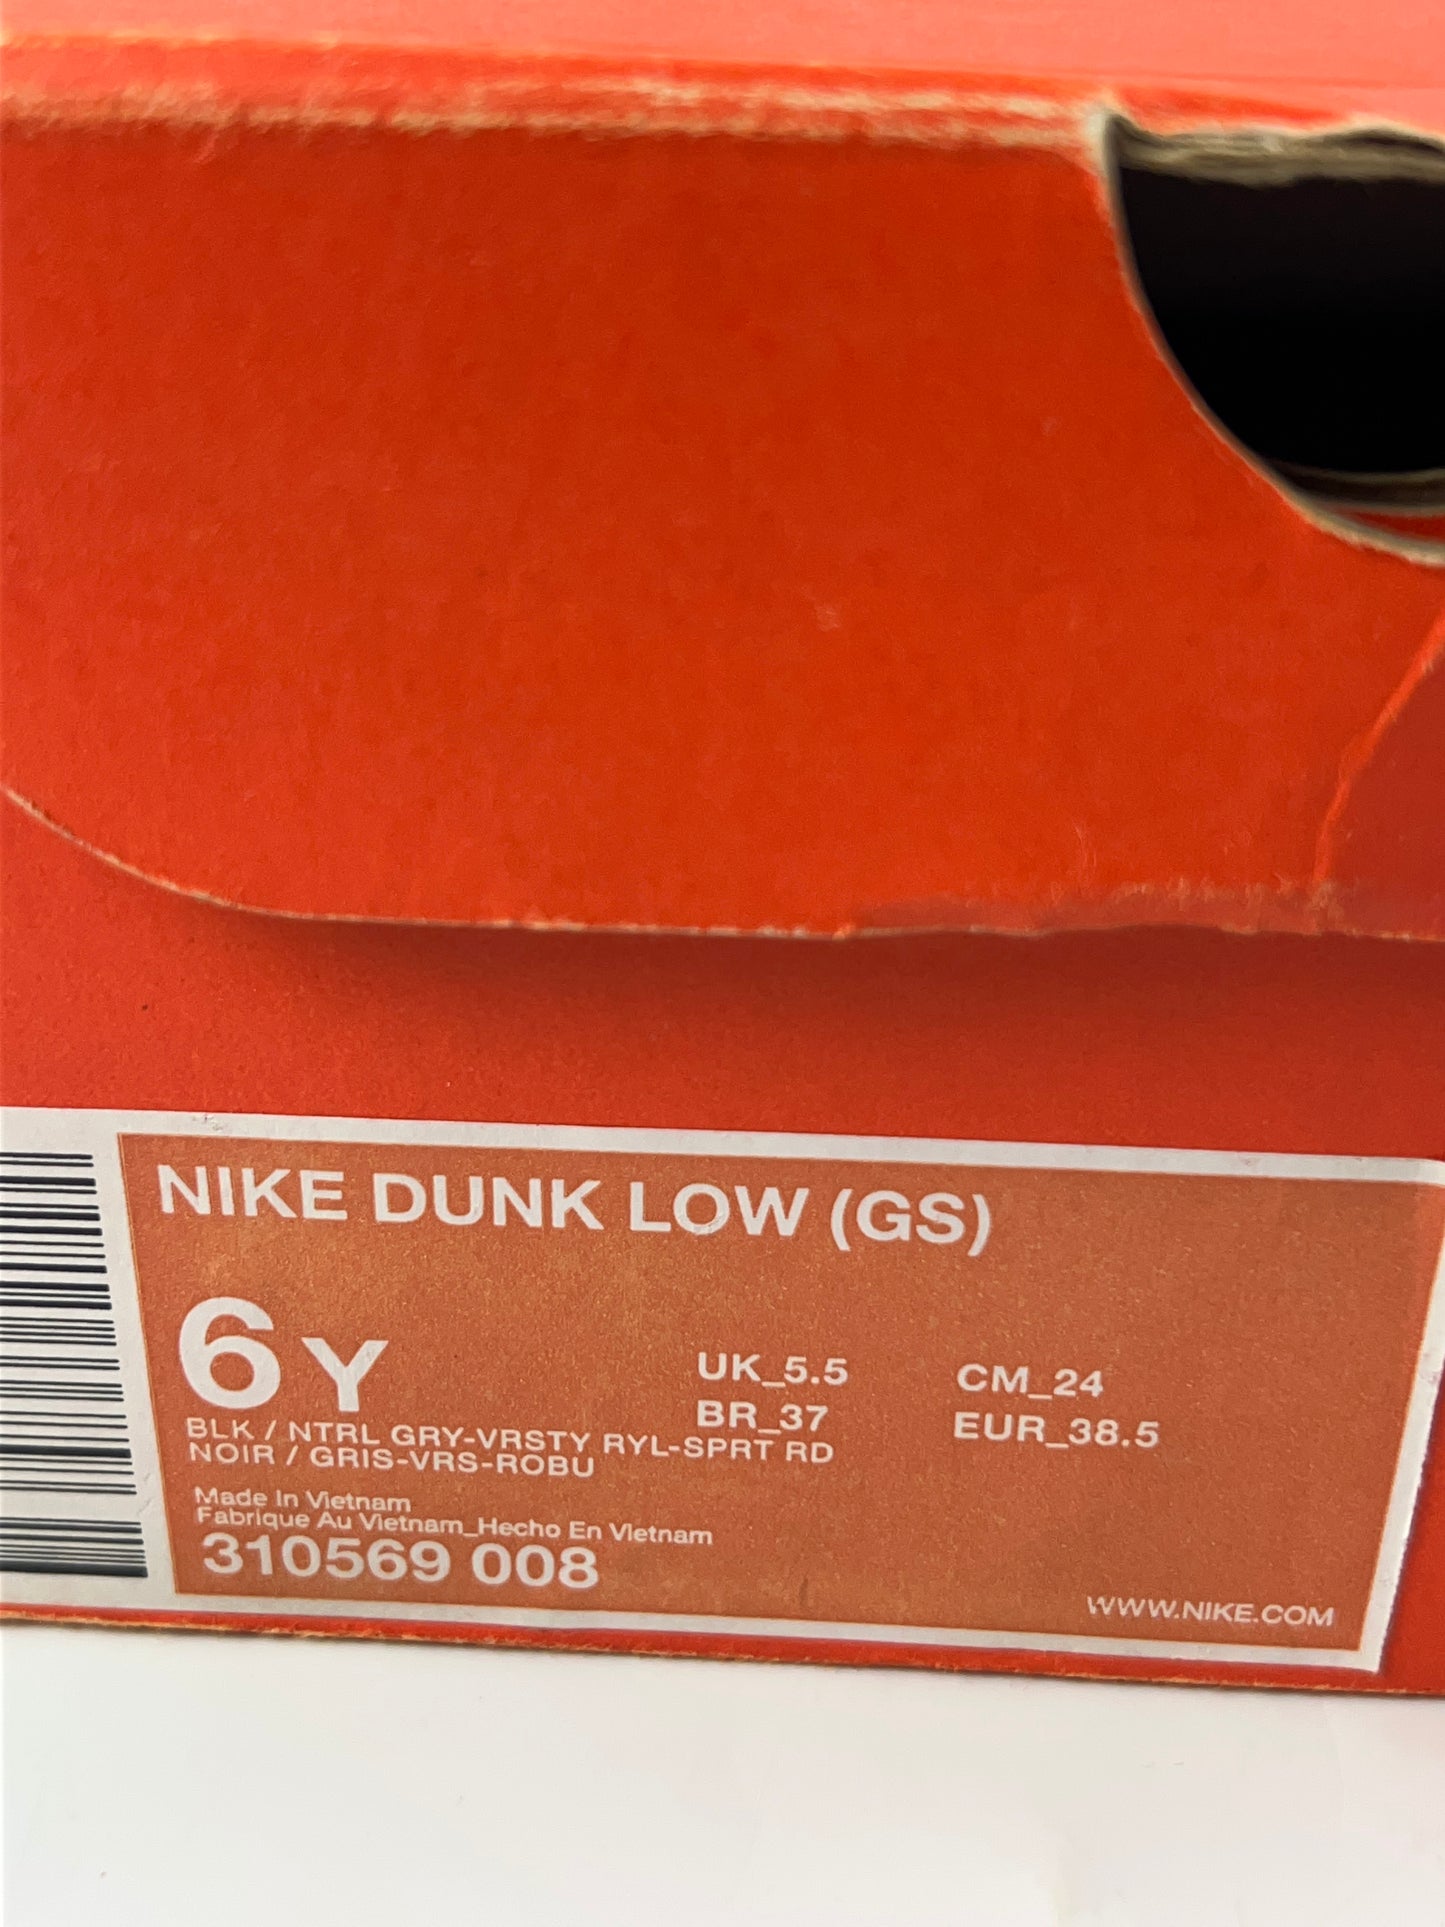 2007 Nike Dunk Low GS Black/Royal Shoes 310569-008 Kid 6y Women 7.5